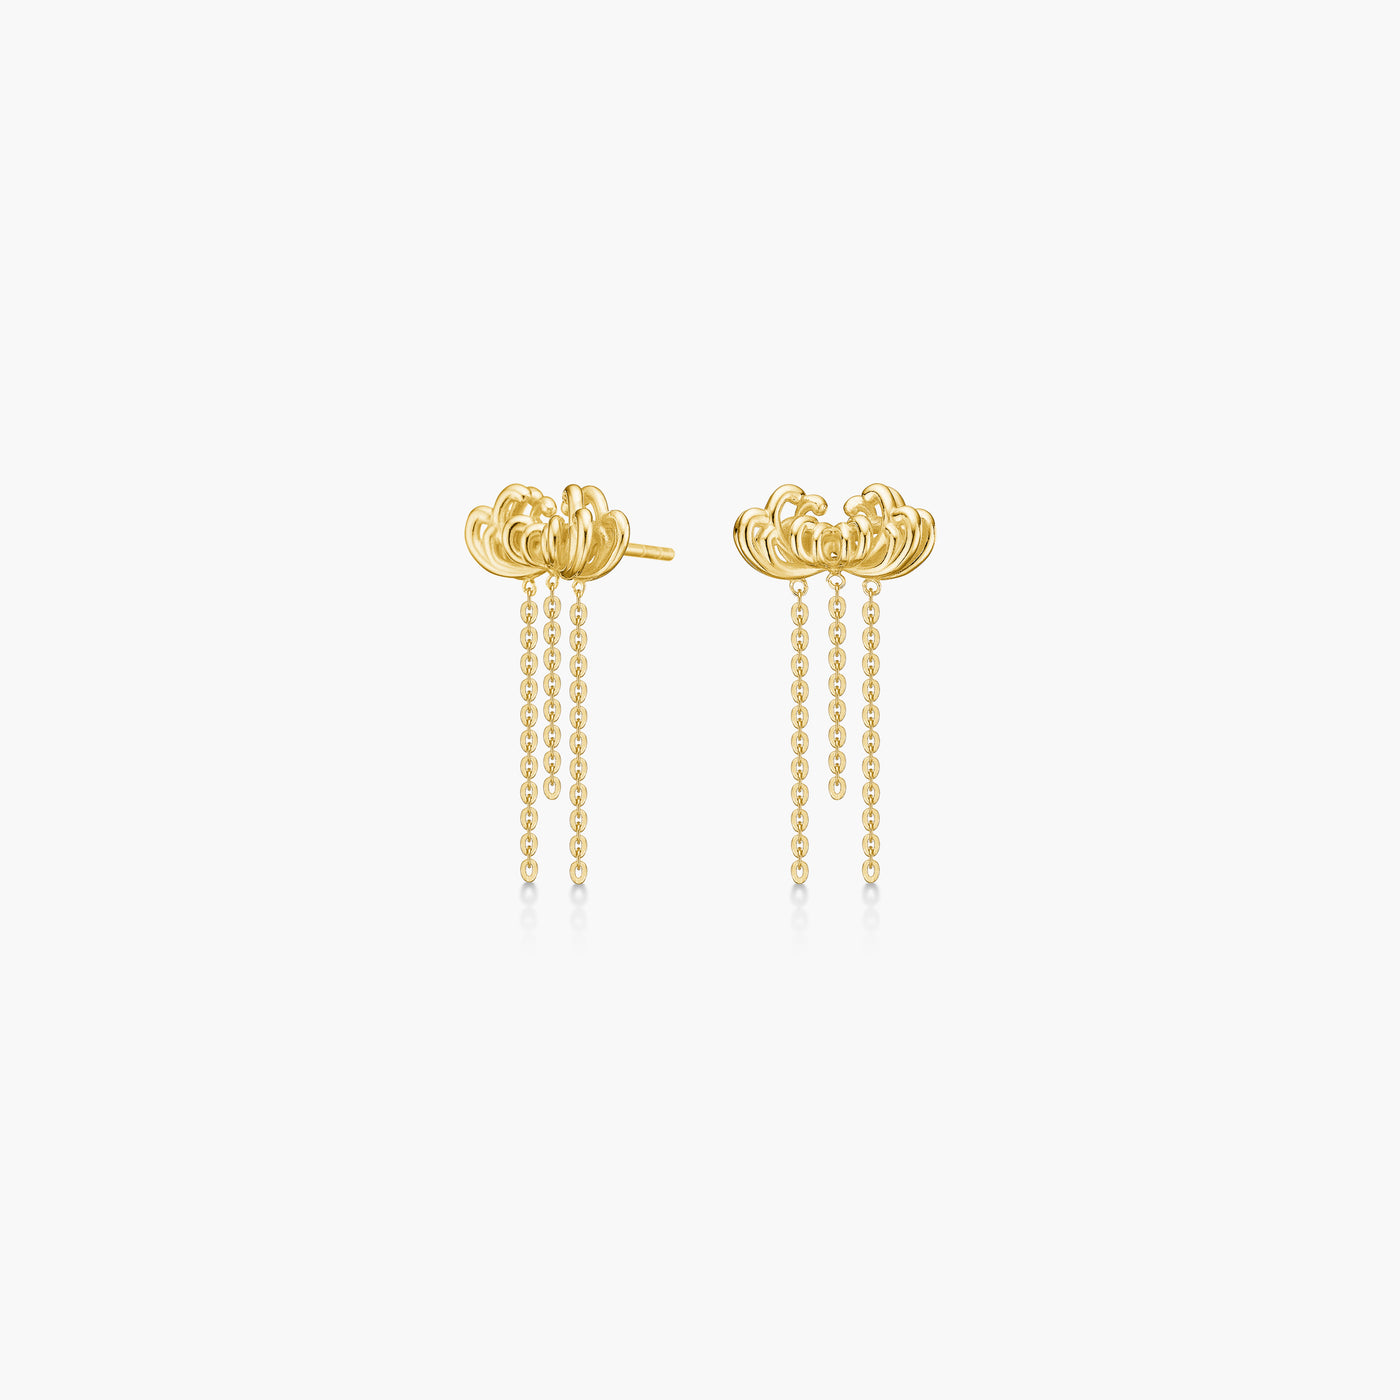 Polar Jewelry Chrysanthemum flower earrings gold shop affordable fine jewelry gift for women jewellery joyful fun colourful scandinavian danish design gold 